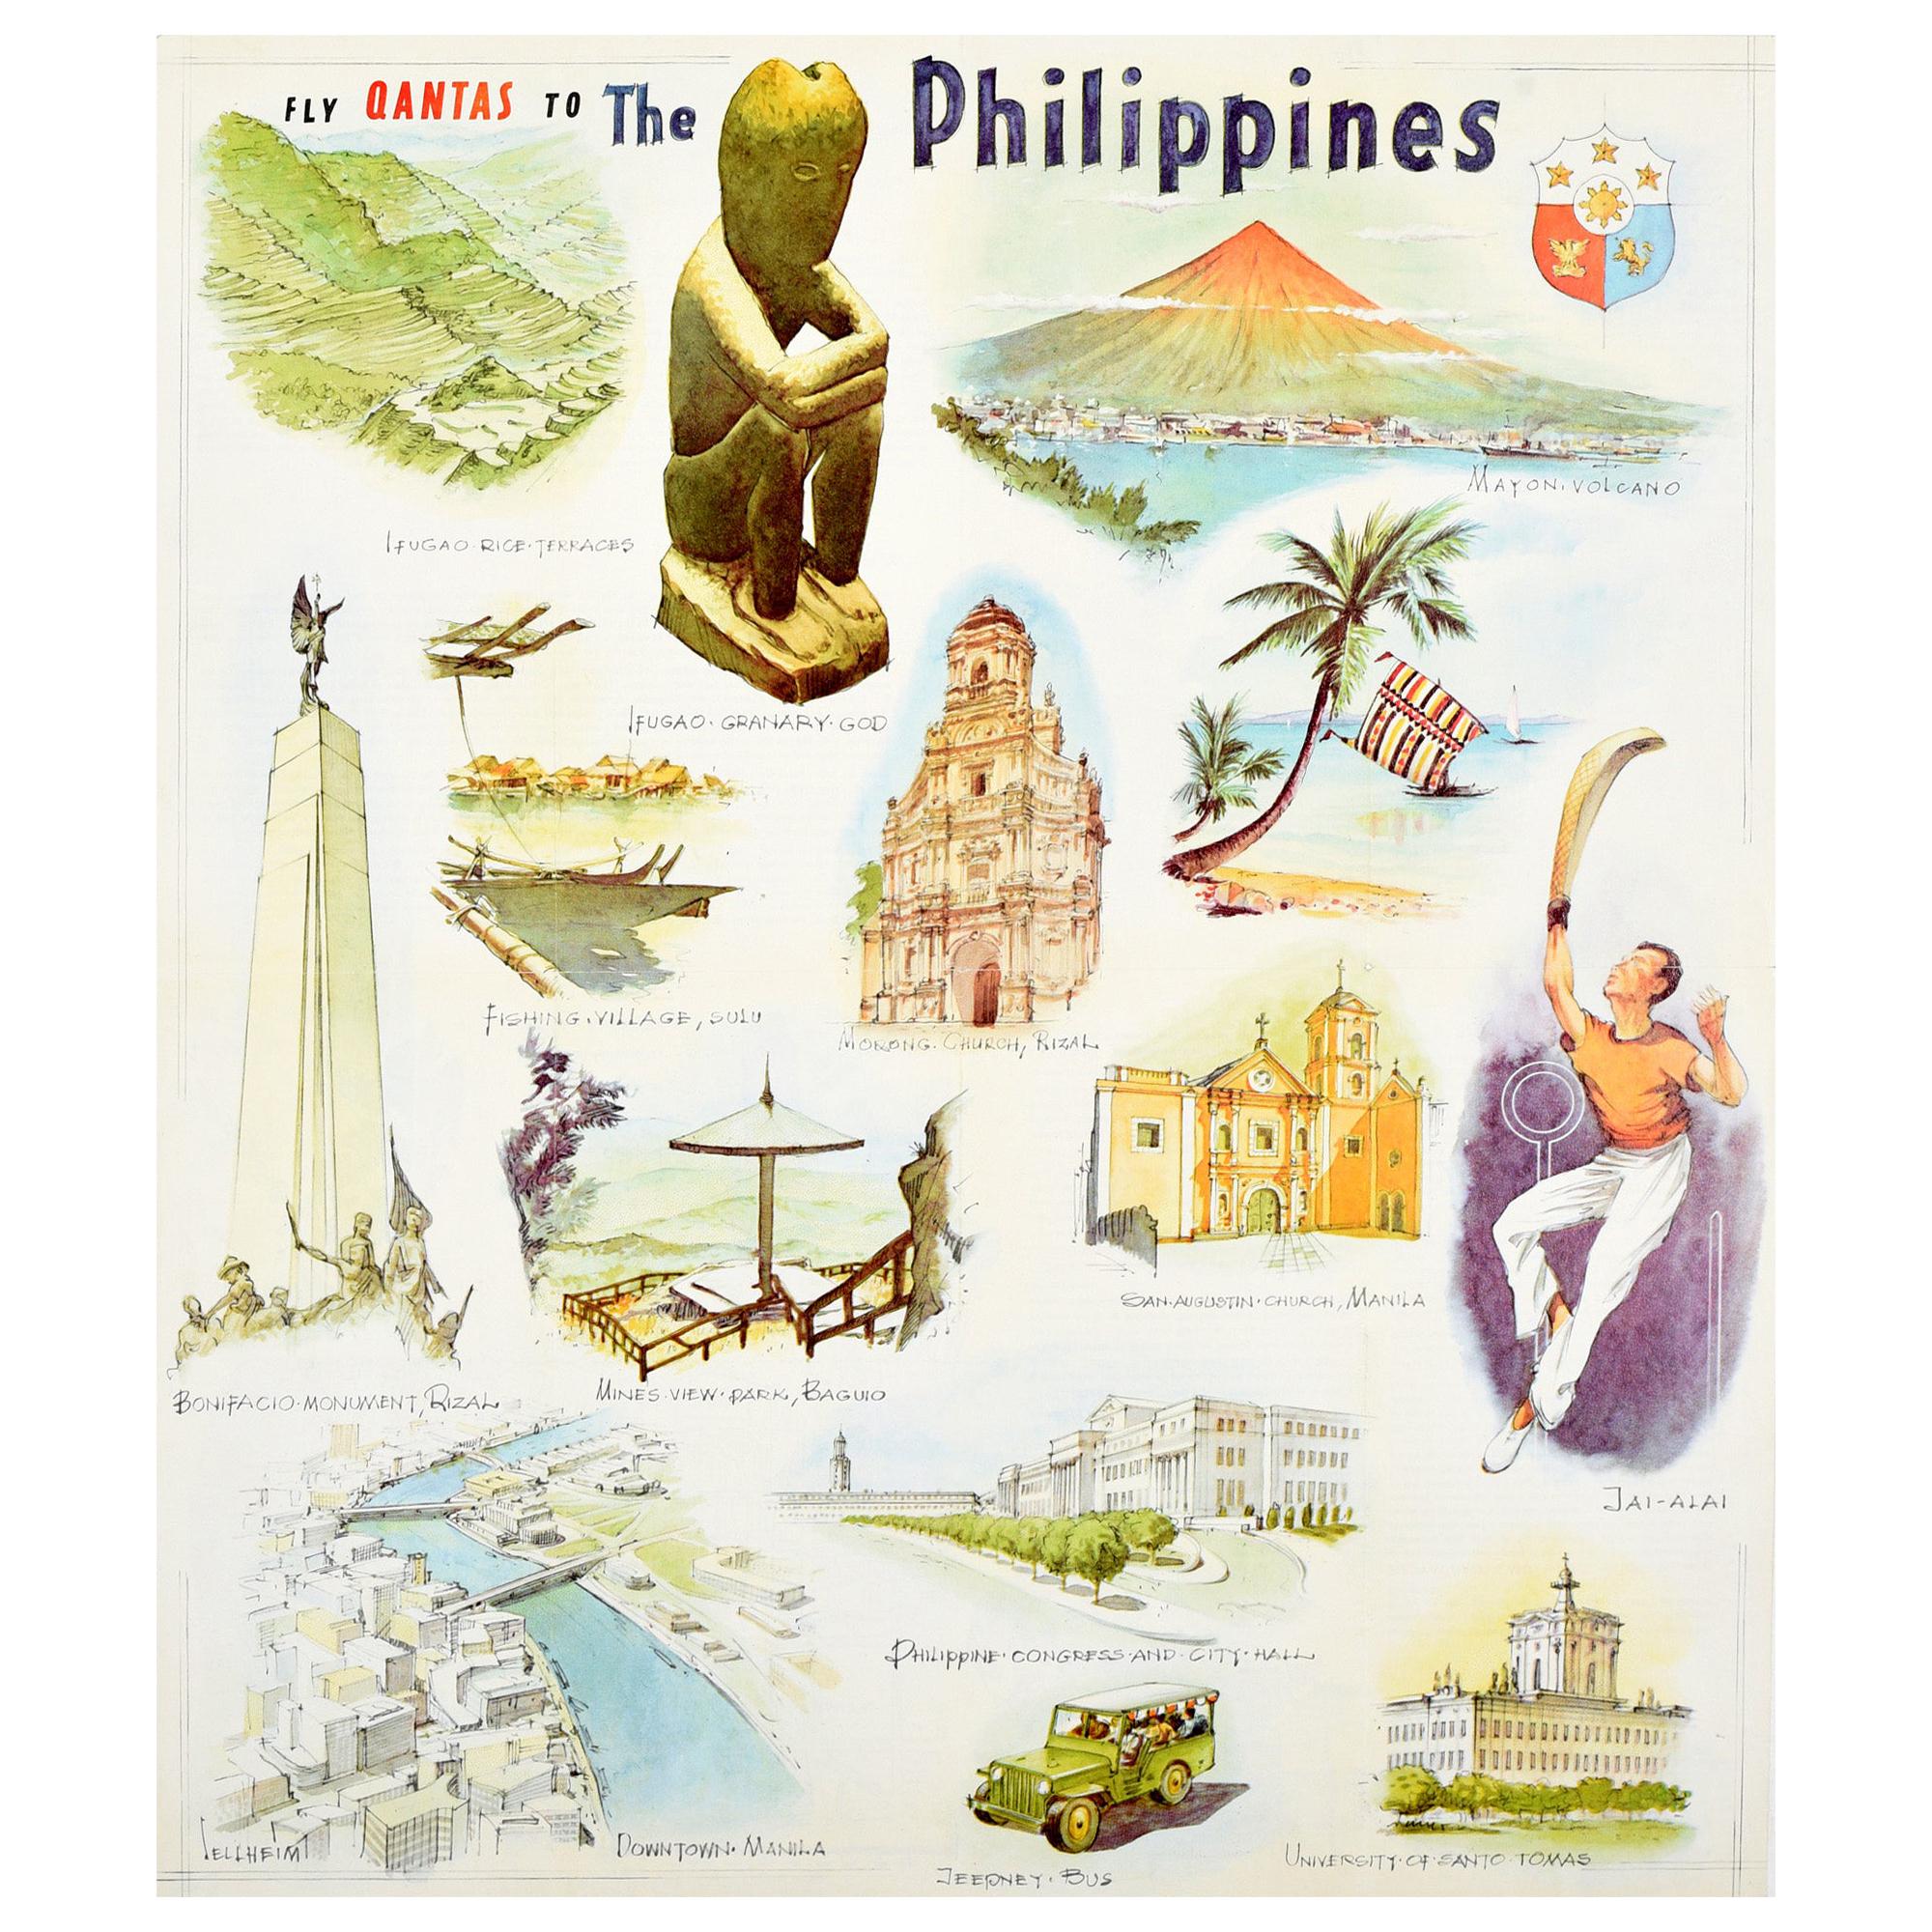 Affiche vintage originale Fly Qantas To The Philippines, Voyage, Illustrations d'art